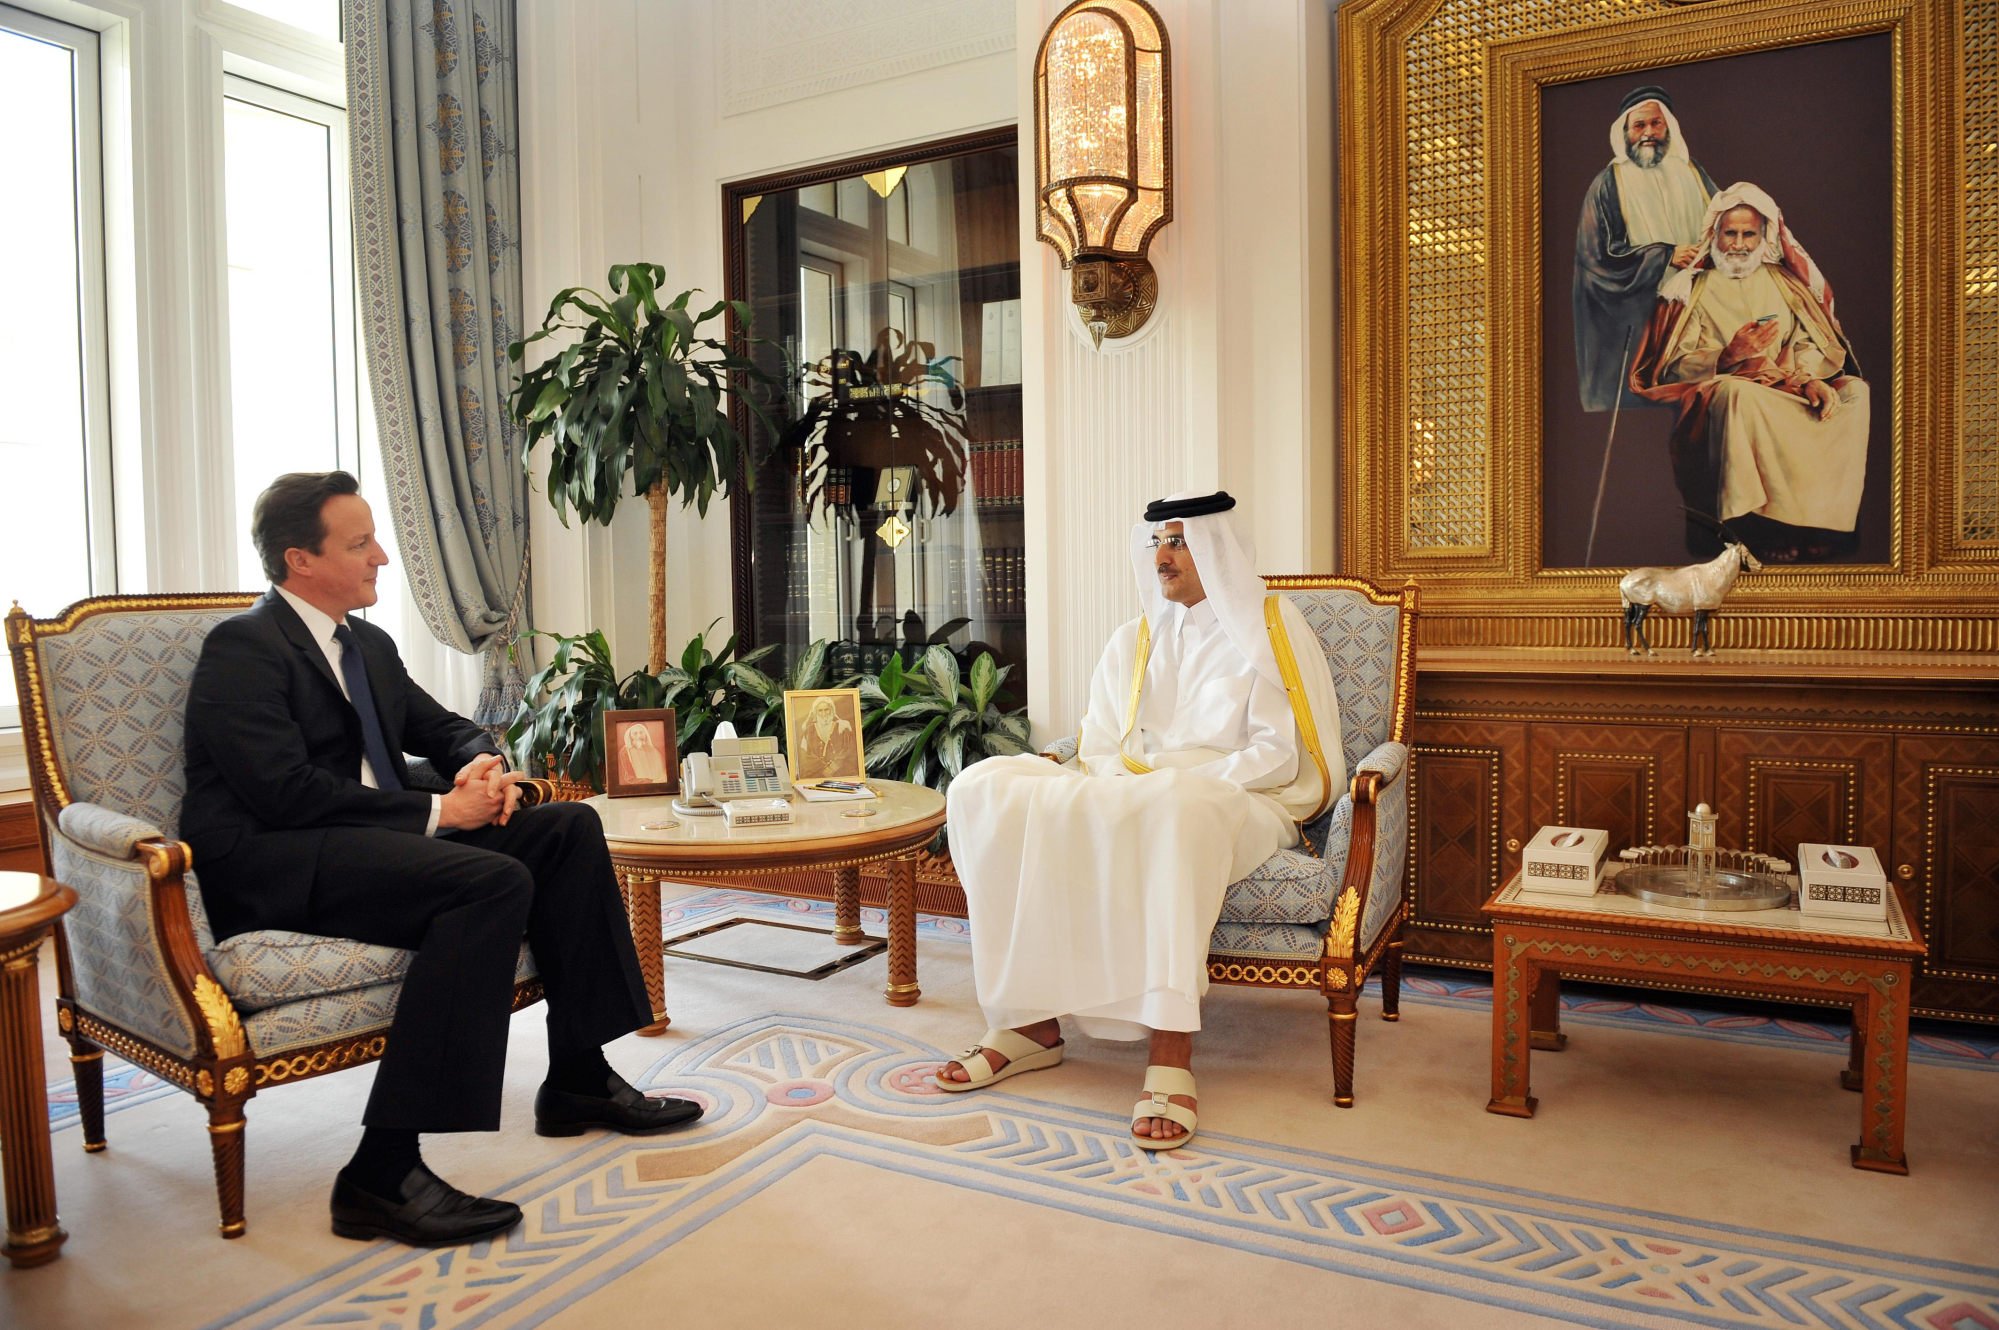 Former British Prime Minister David Cameron meets with the Crown Prince of Qatar Sheikh Tamim bin Hamad bin Khalifa Al-Thani, at the Royal Palace in Doha, Qatar. Photo: Getty Images